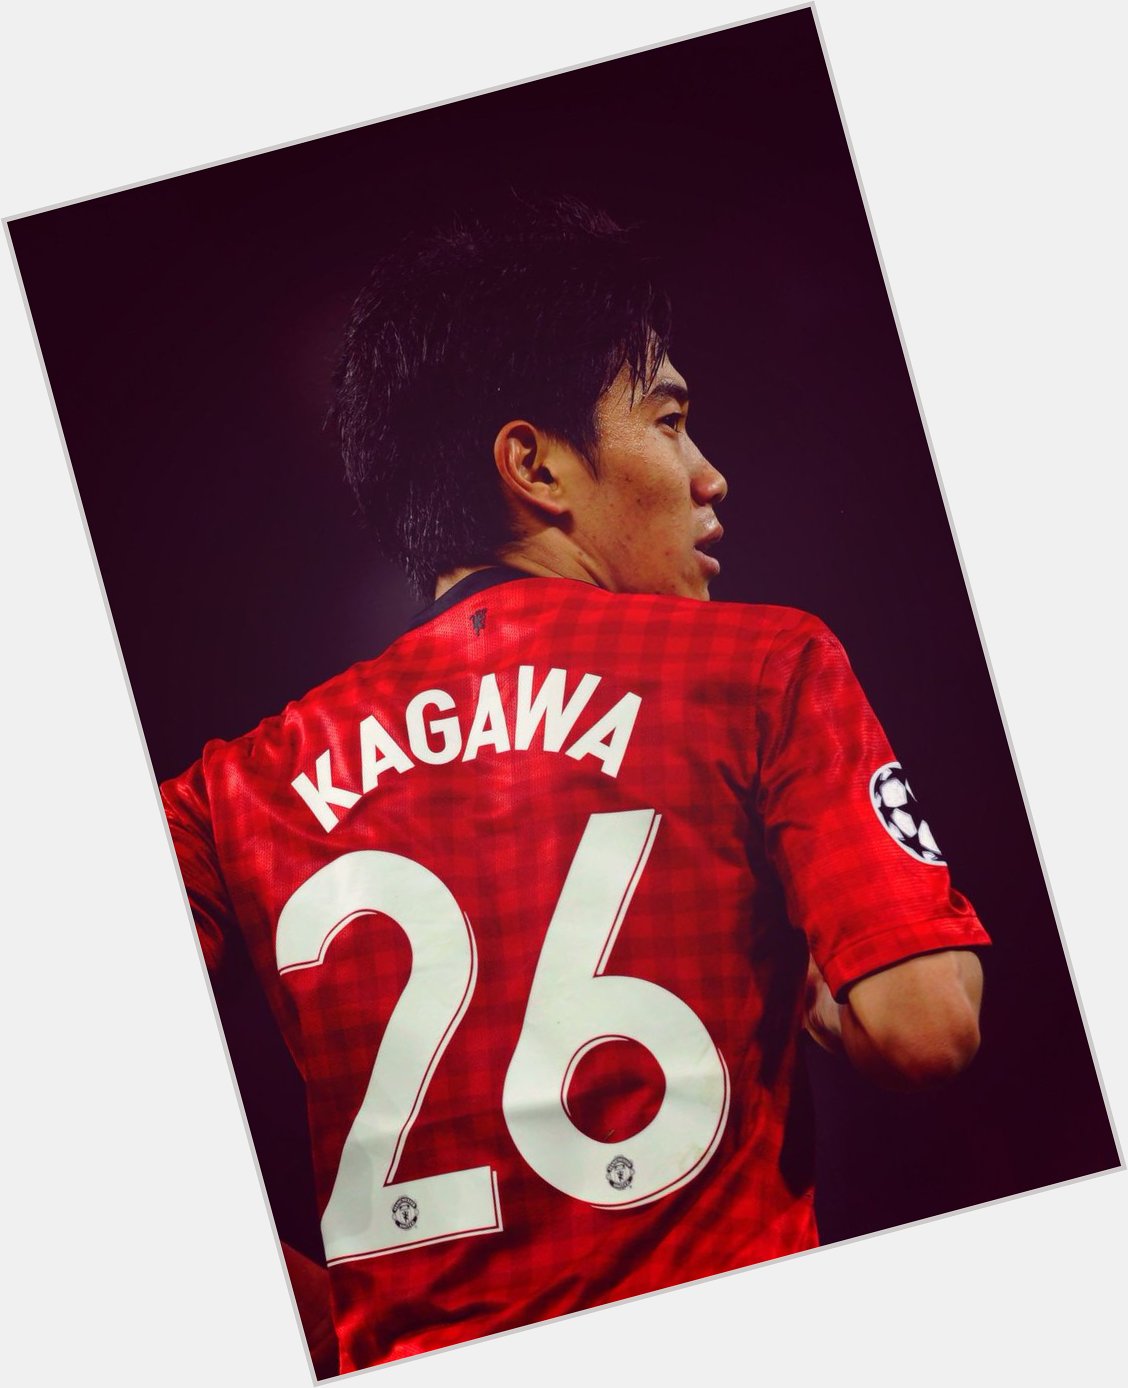 Happy birthday to former player Shinji Kagawa! 